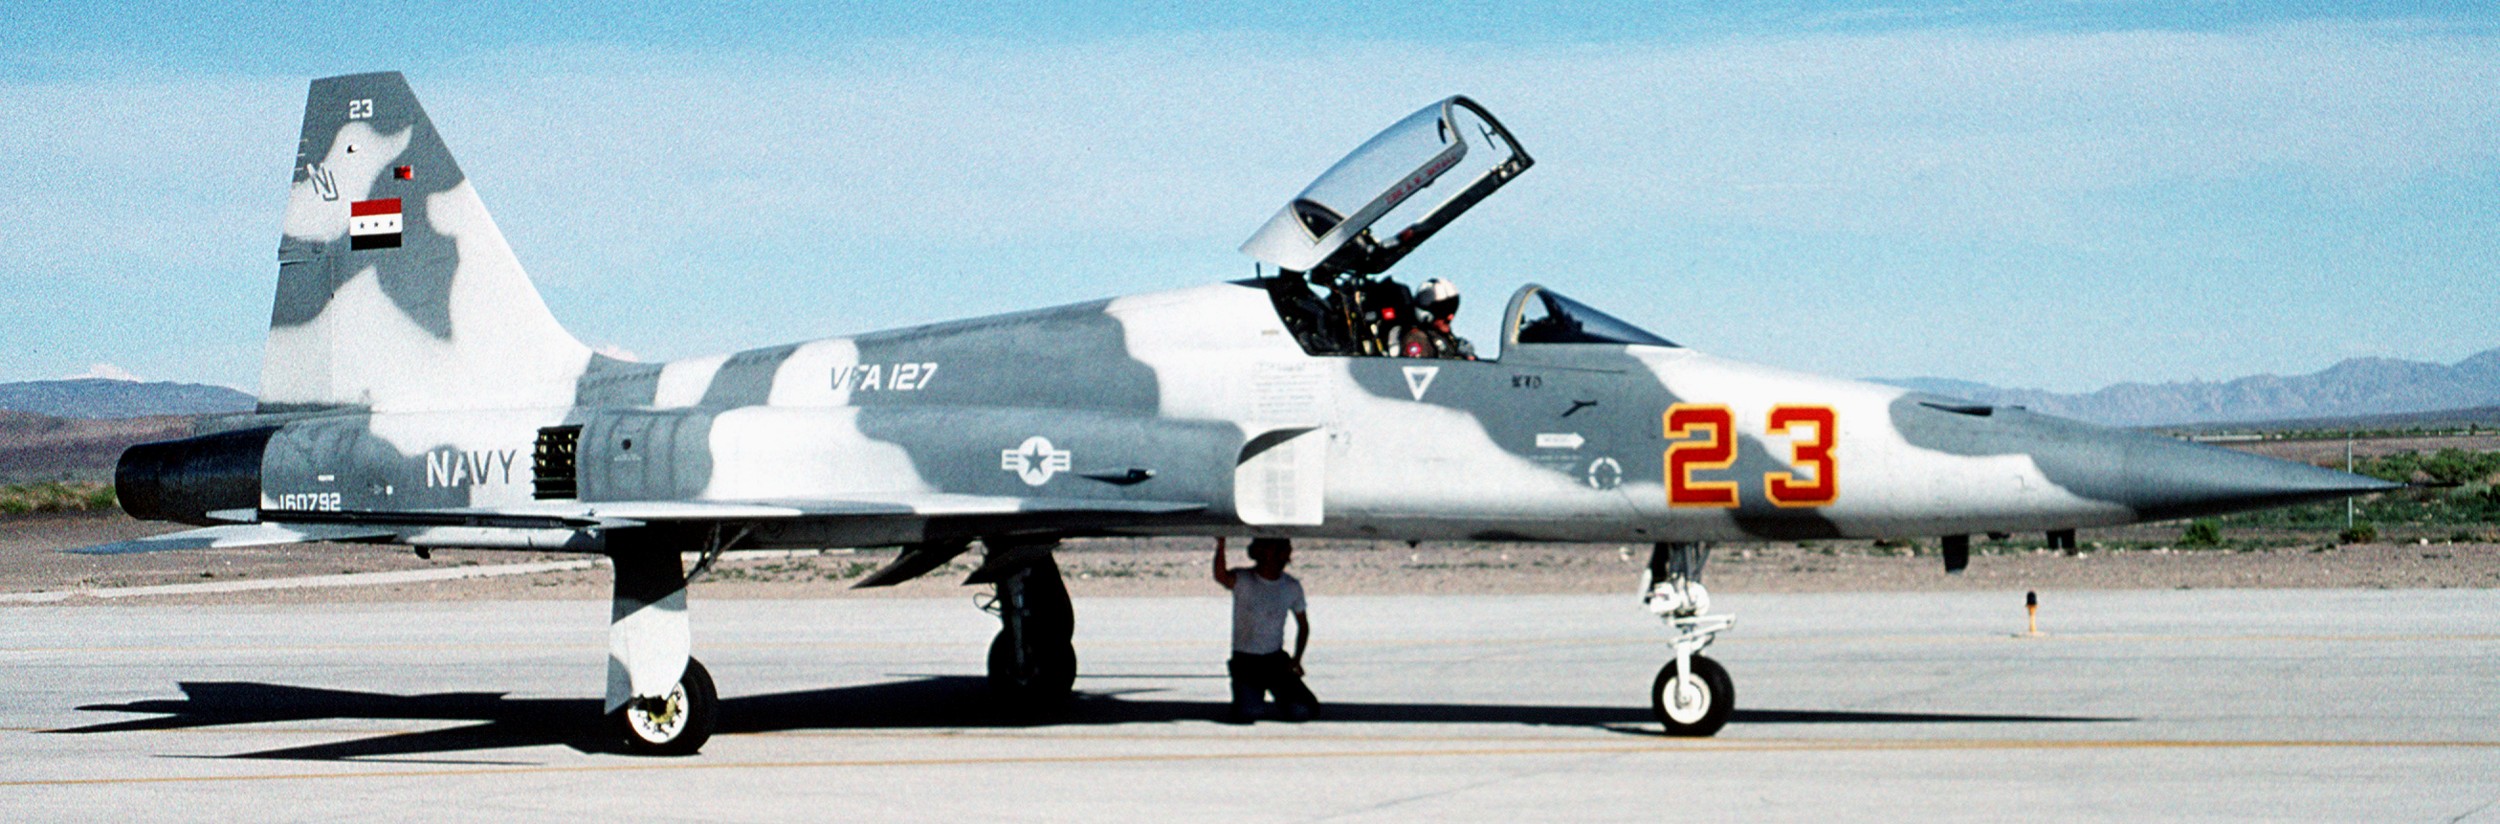 vfa-127 desert bogeys strike fighter squadron f-5e tiger 1993 21 nas fallon nevada